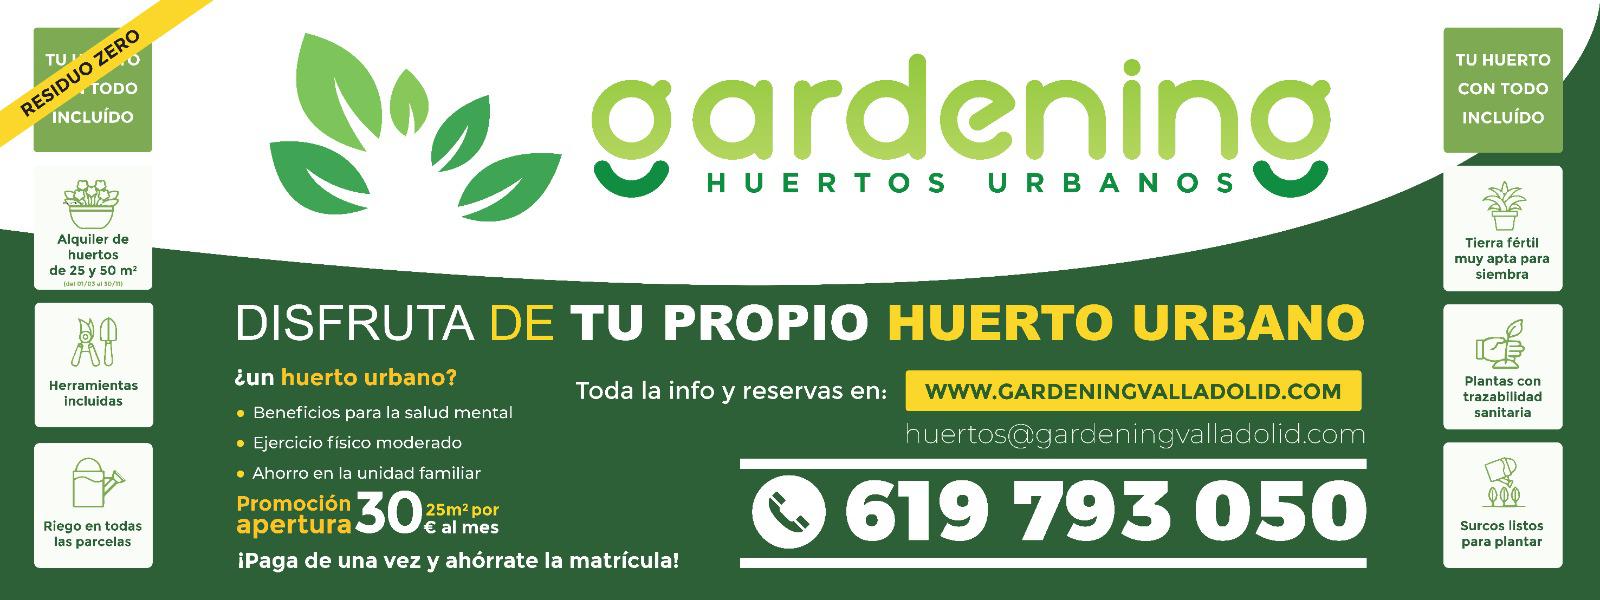 Images Gardening Valladolid – Huertos Urbanos